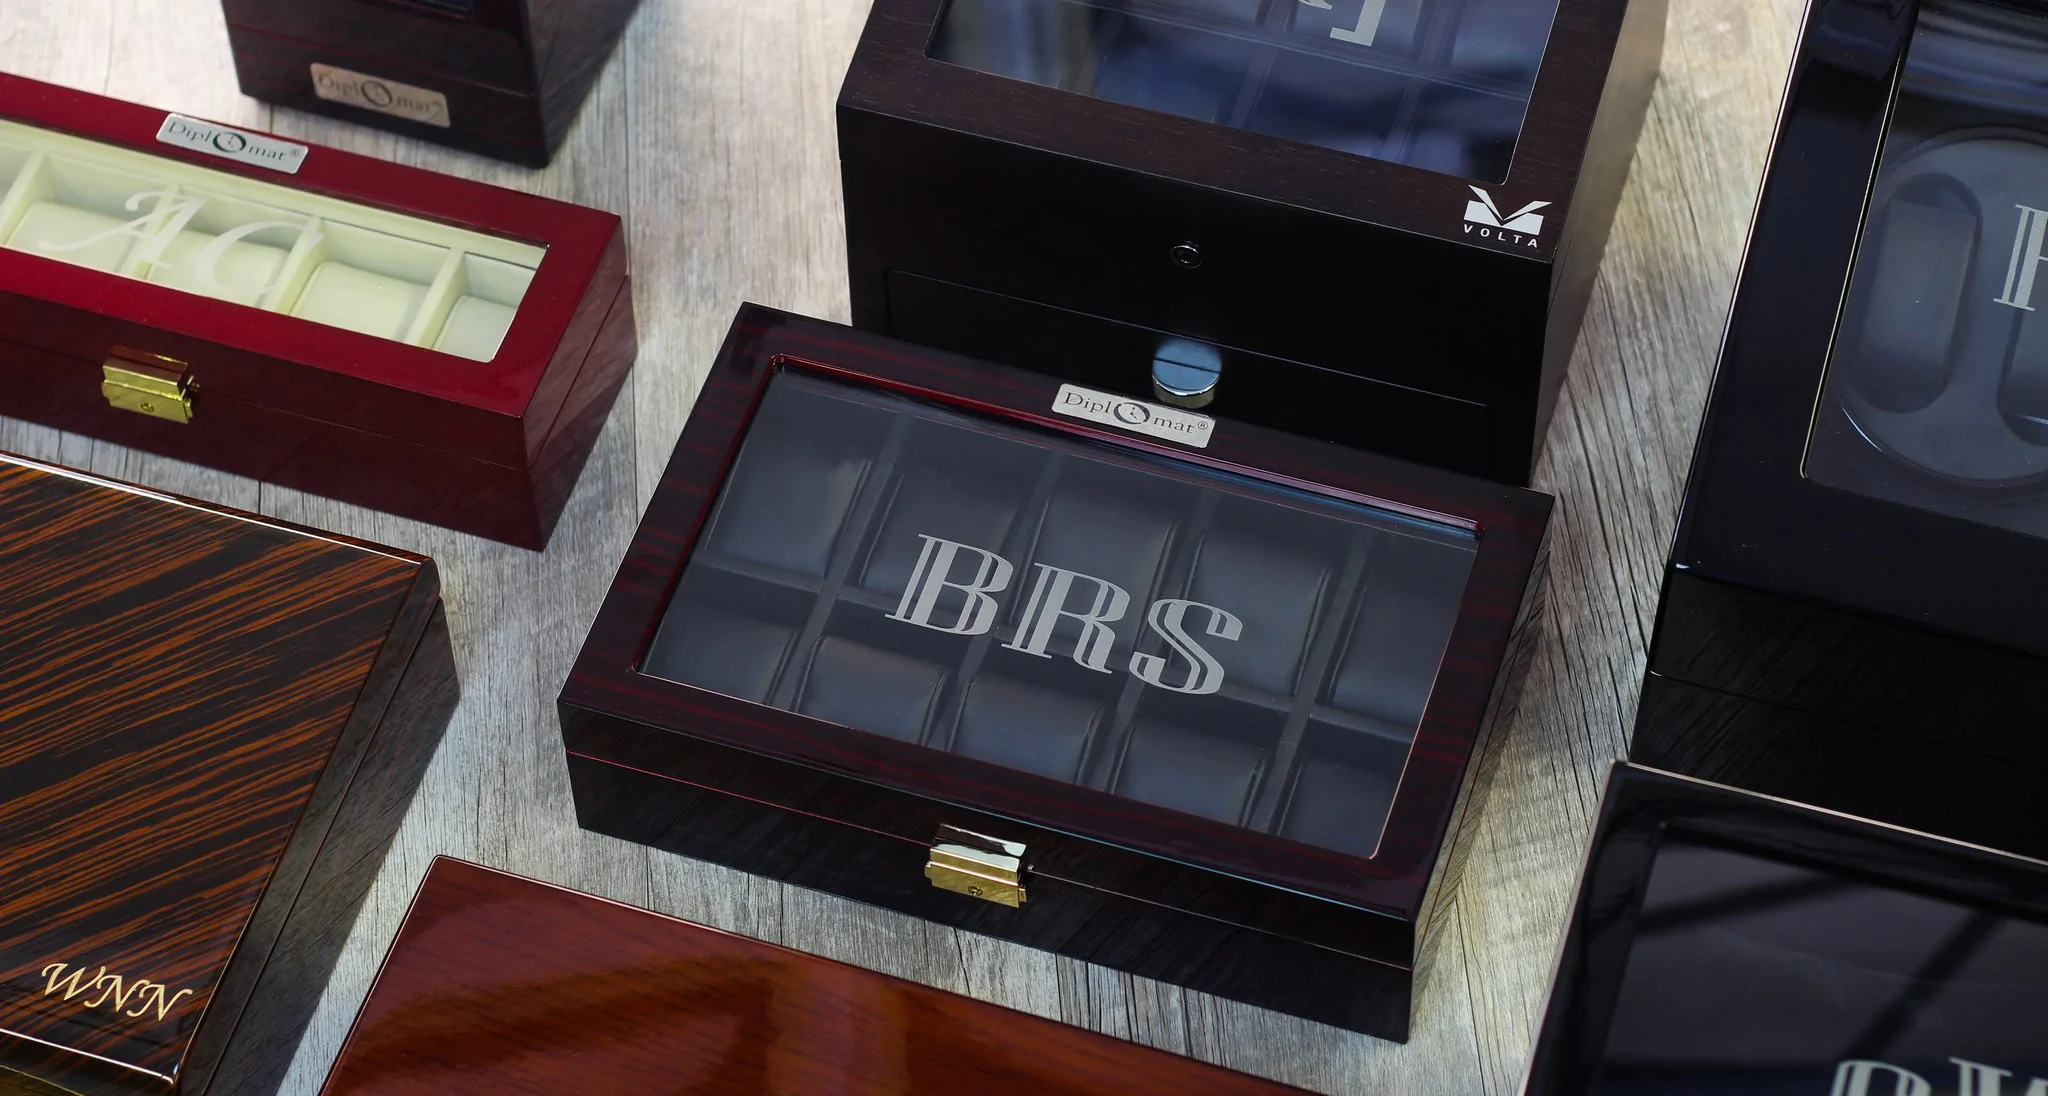 4 Combination Vintage Oak Wood Watch Box & Jewelry Storage Box – Watch Box  Co.